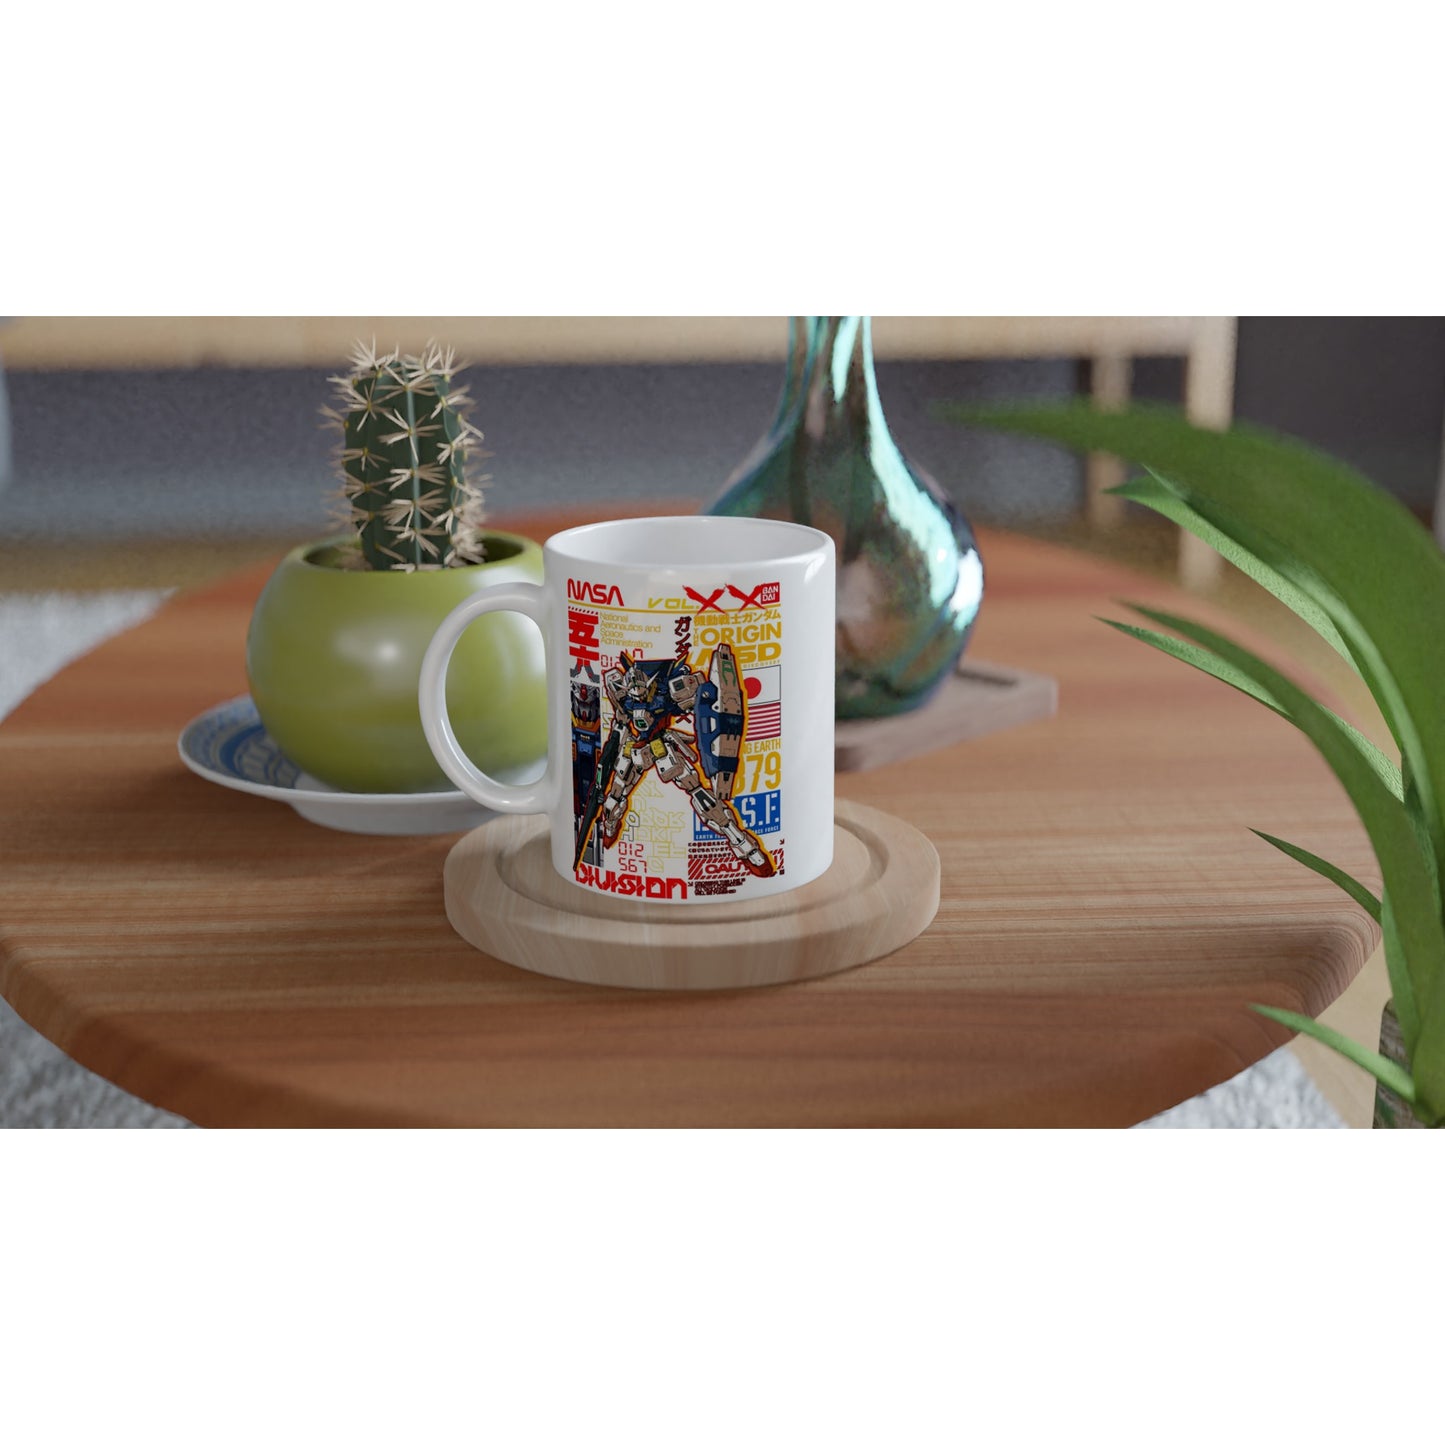 Coffee Mug - Gundam Artwork Vol 2 - White Ceramic 330ml Mug 